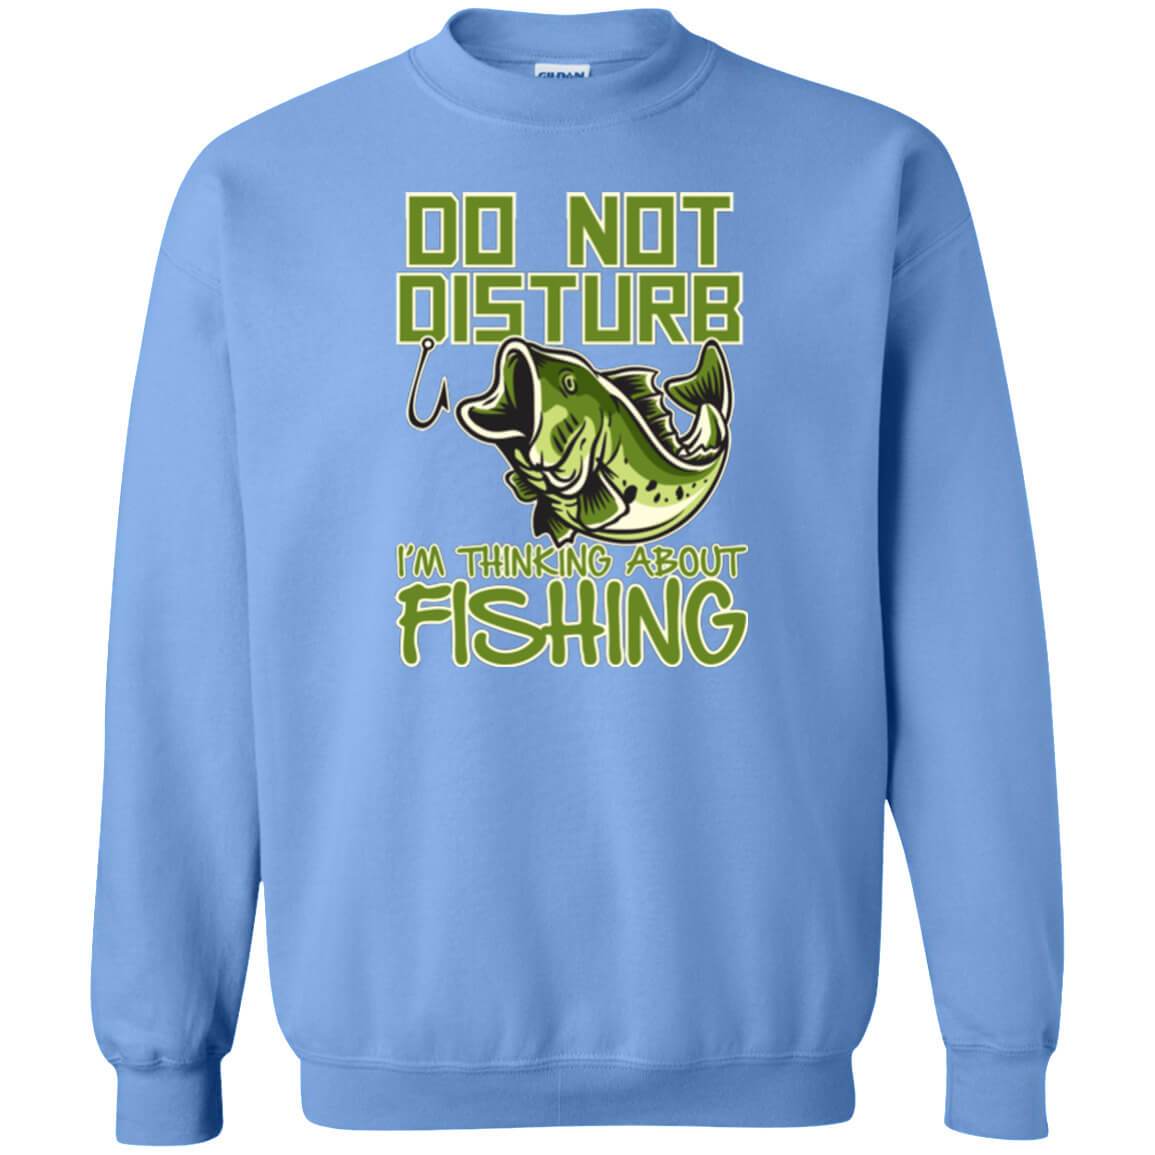 Thinking about fishing Sweatshirt